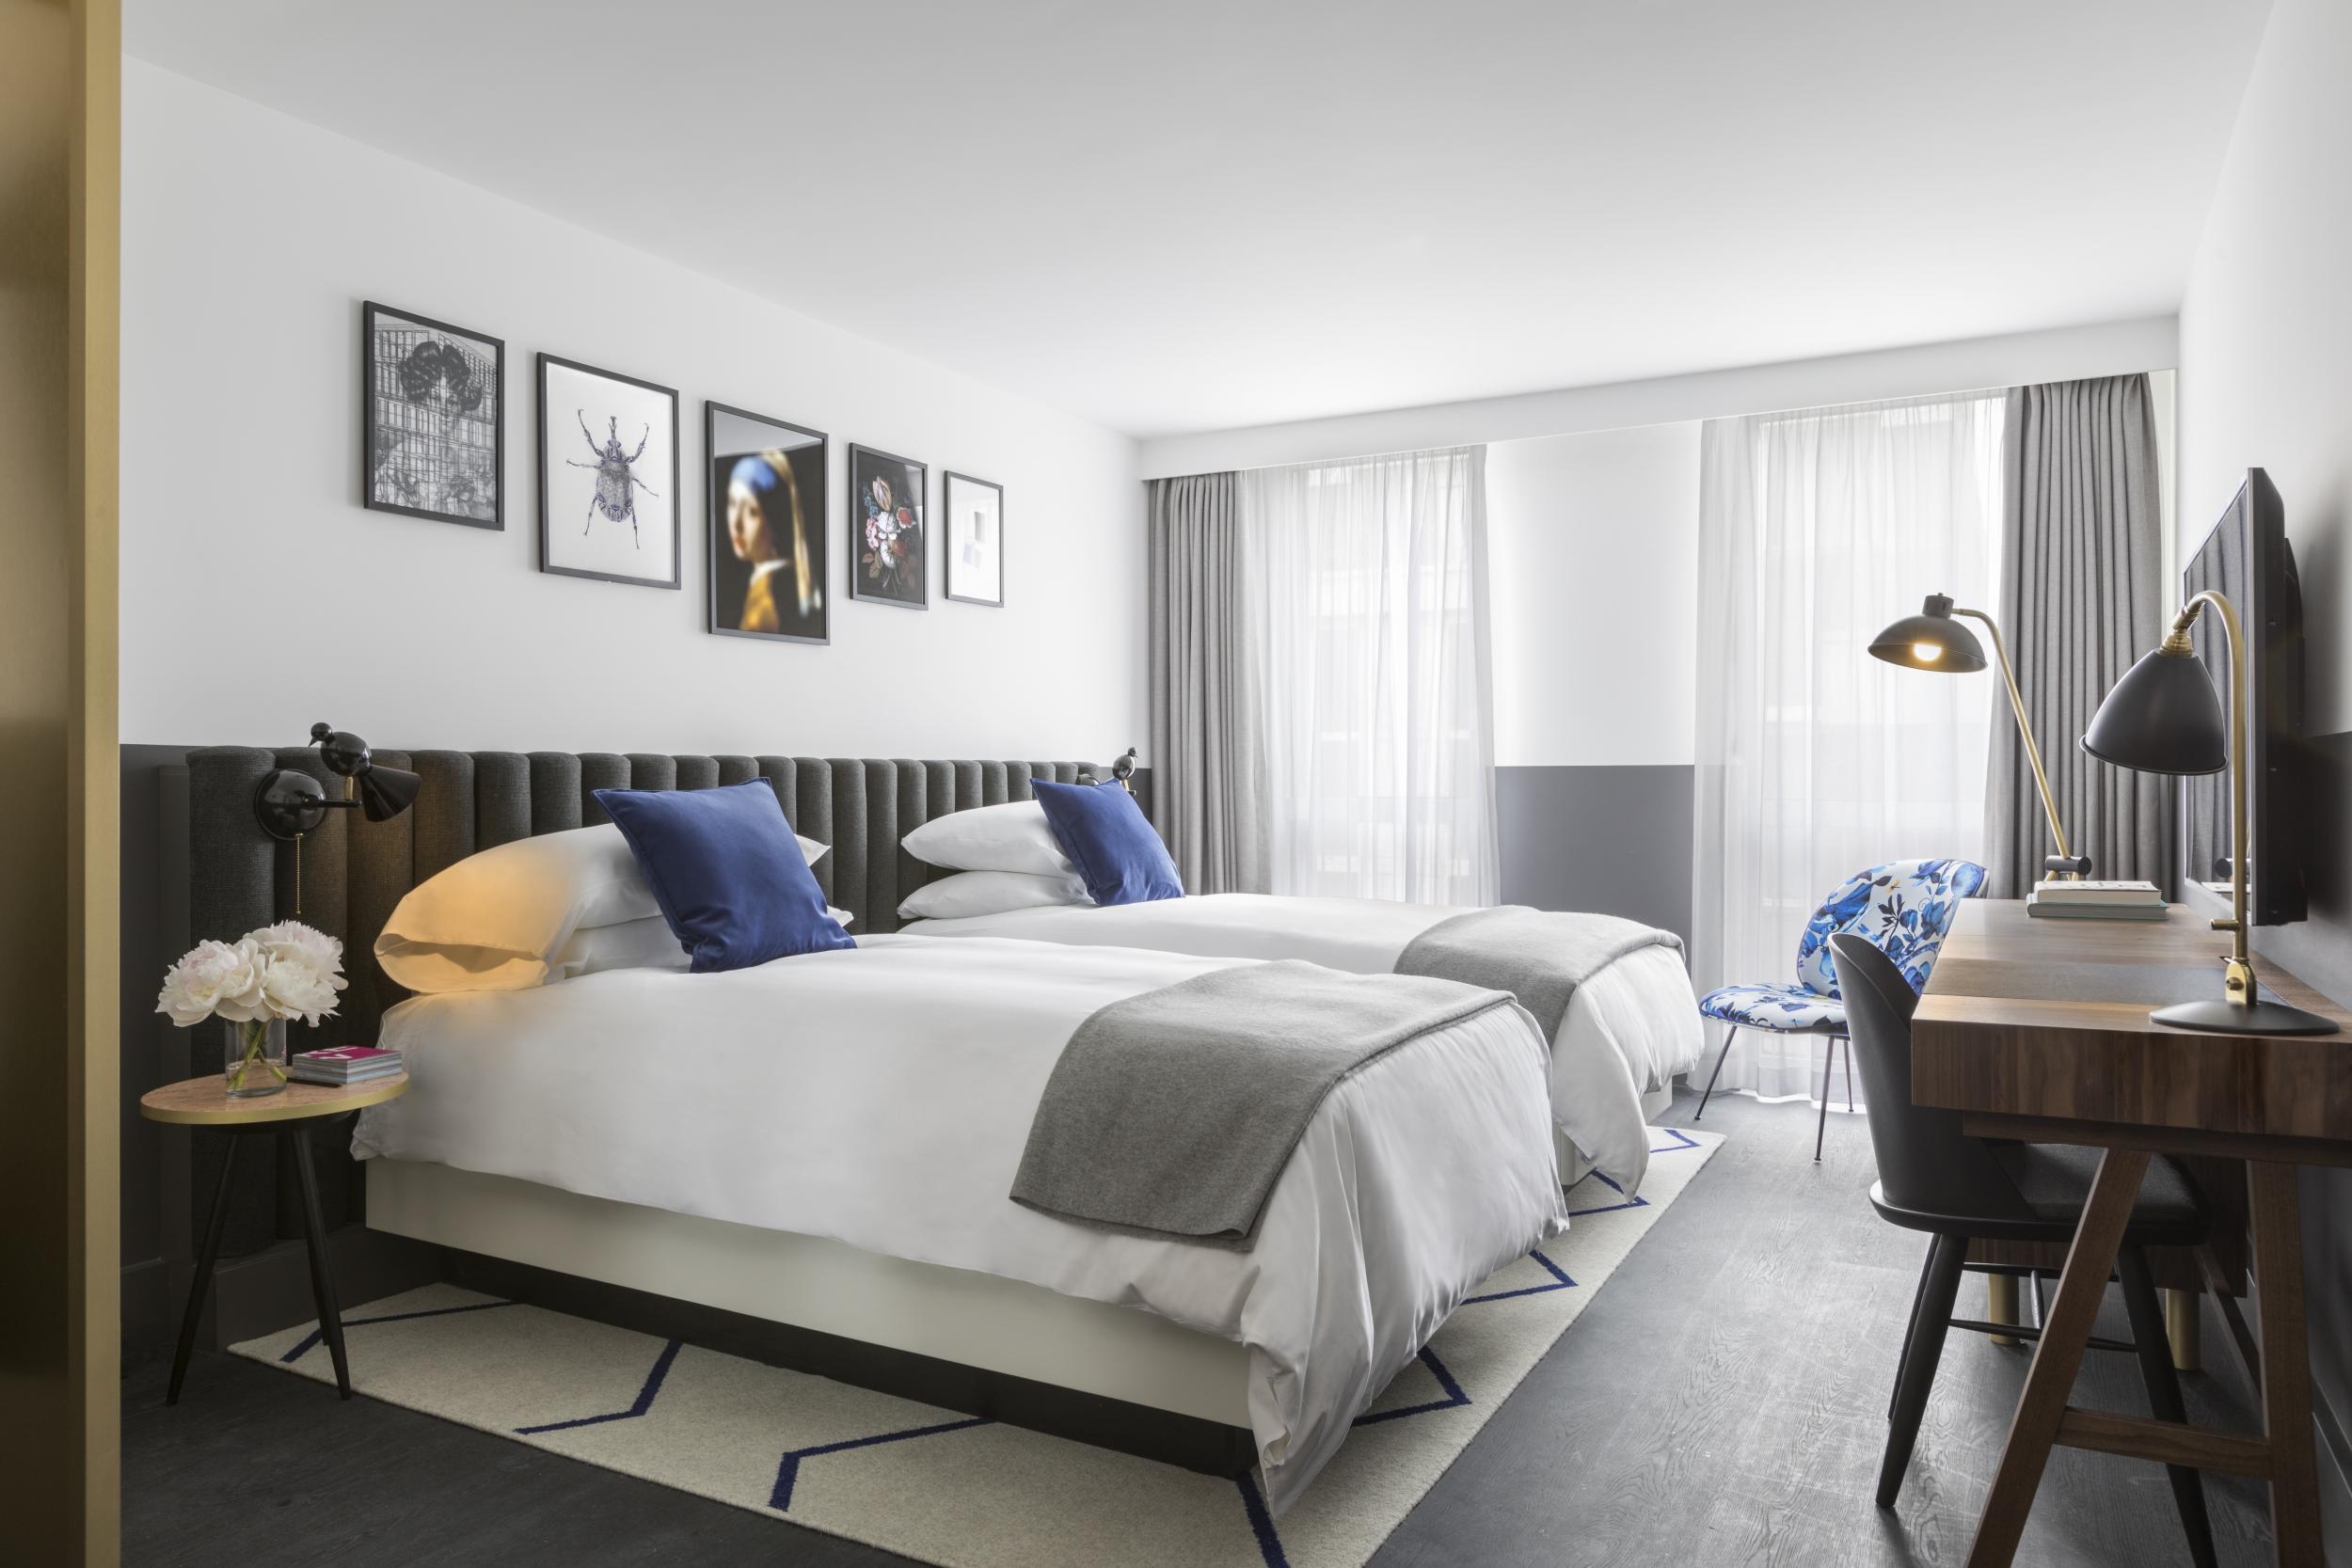 Dutch culture inspires the hotel’s interiors